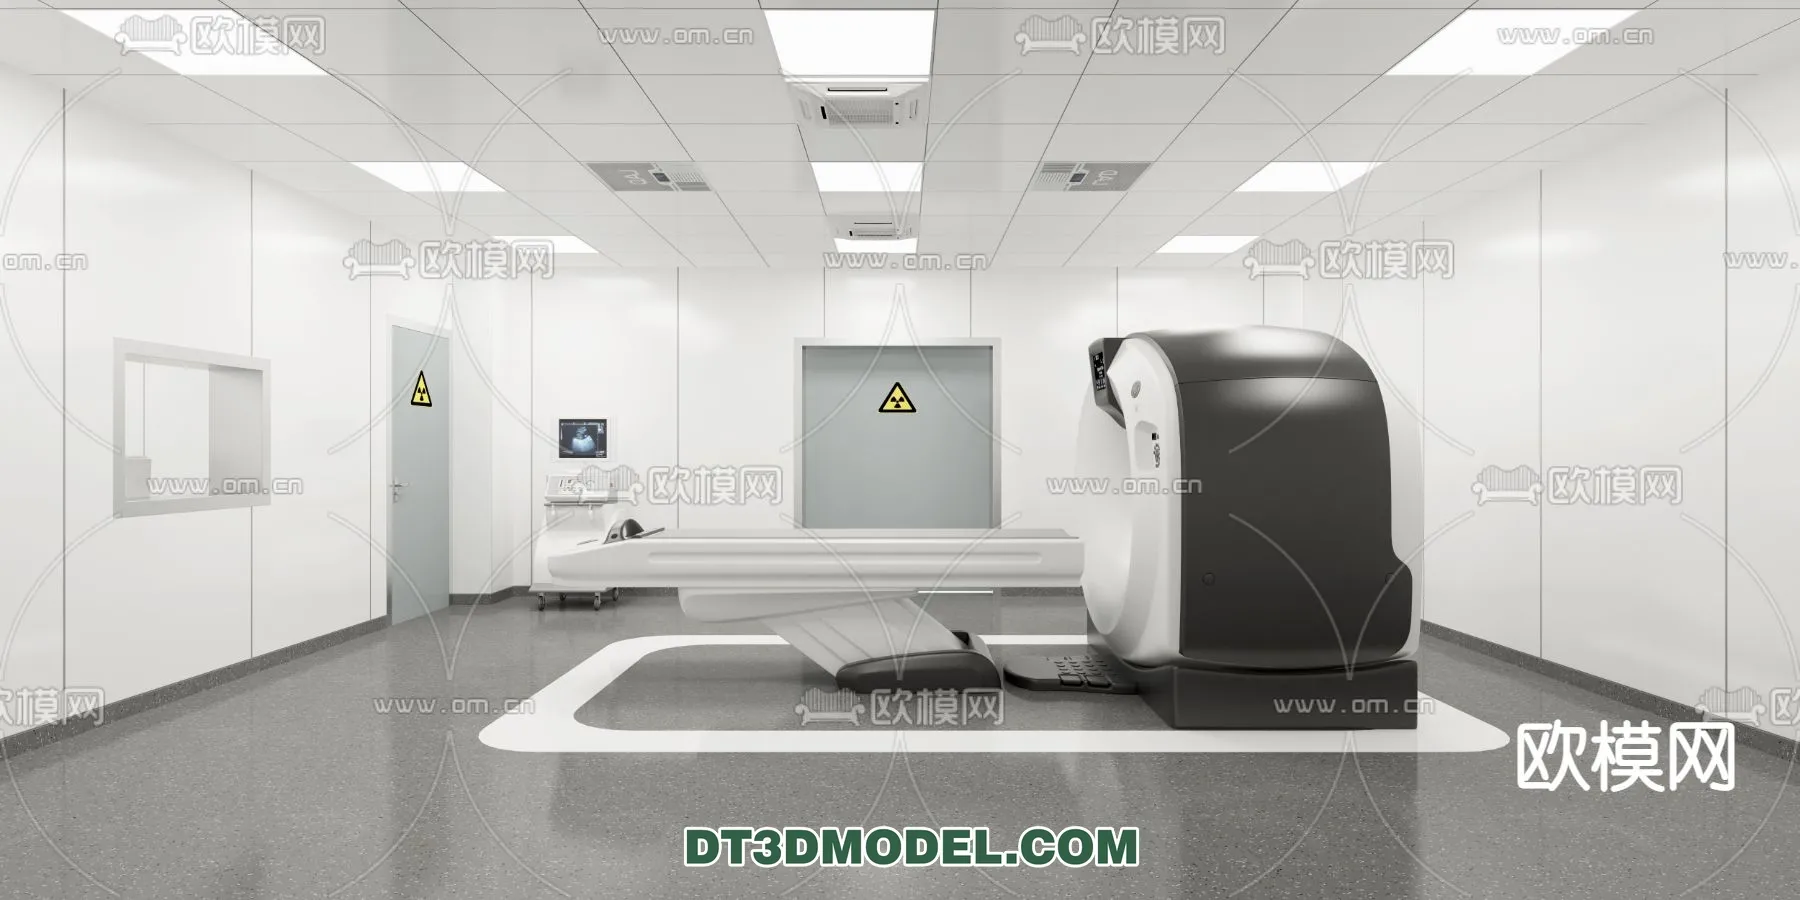 HOSPITAL 3D SCENES – MODERN – 0071